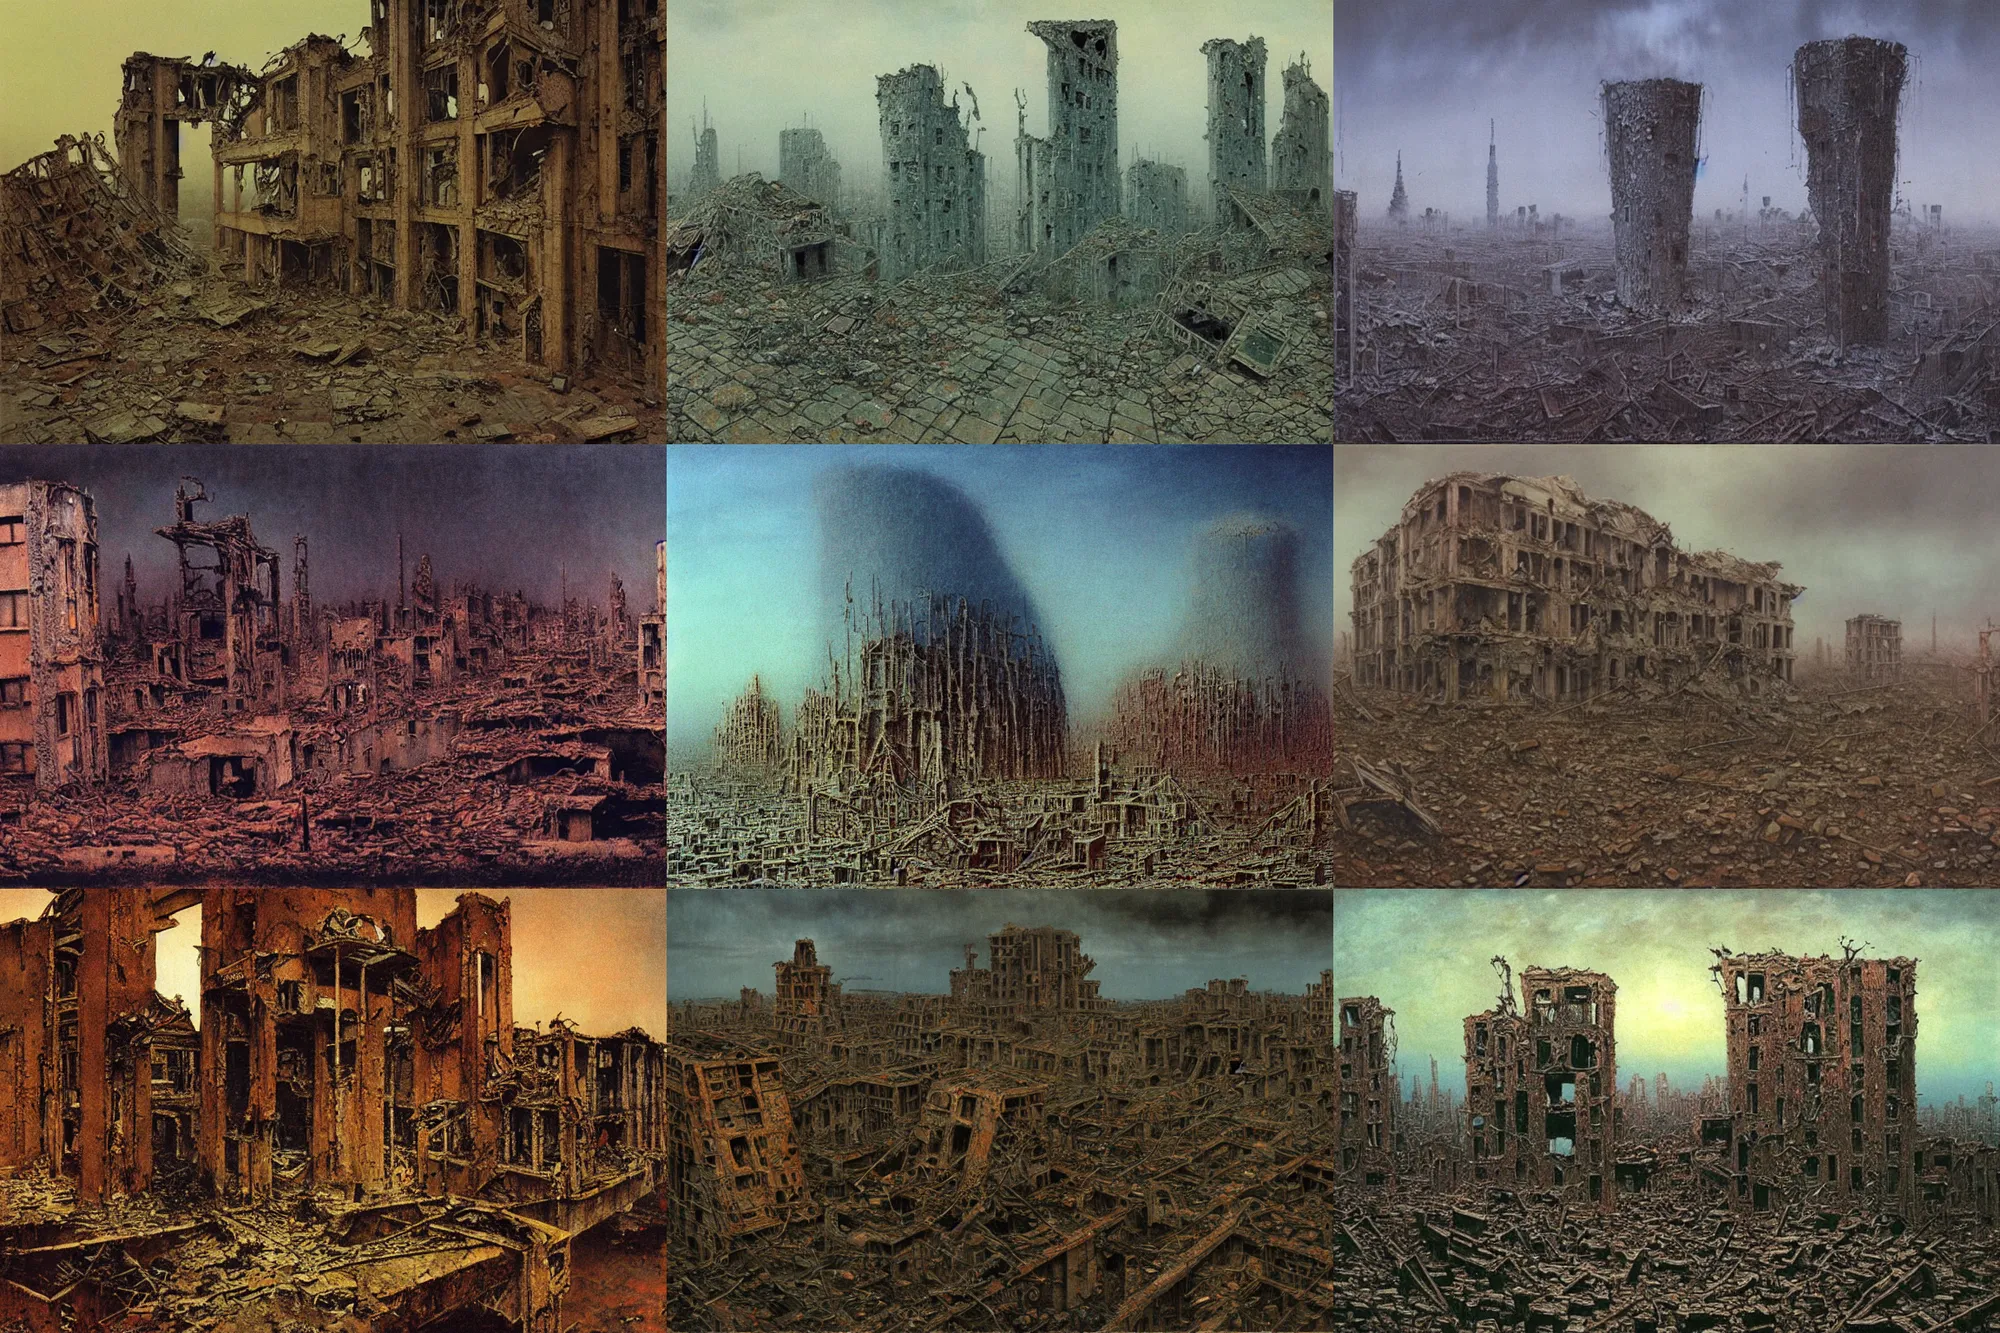 Prompt: nuclear fungus and destroyed buildings, beksinski